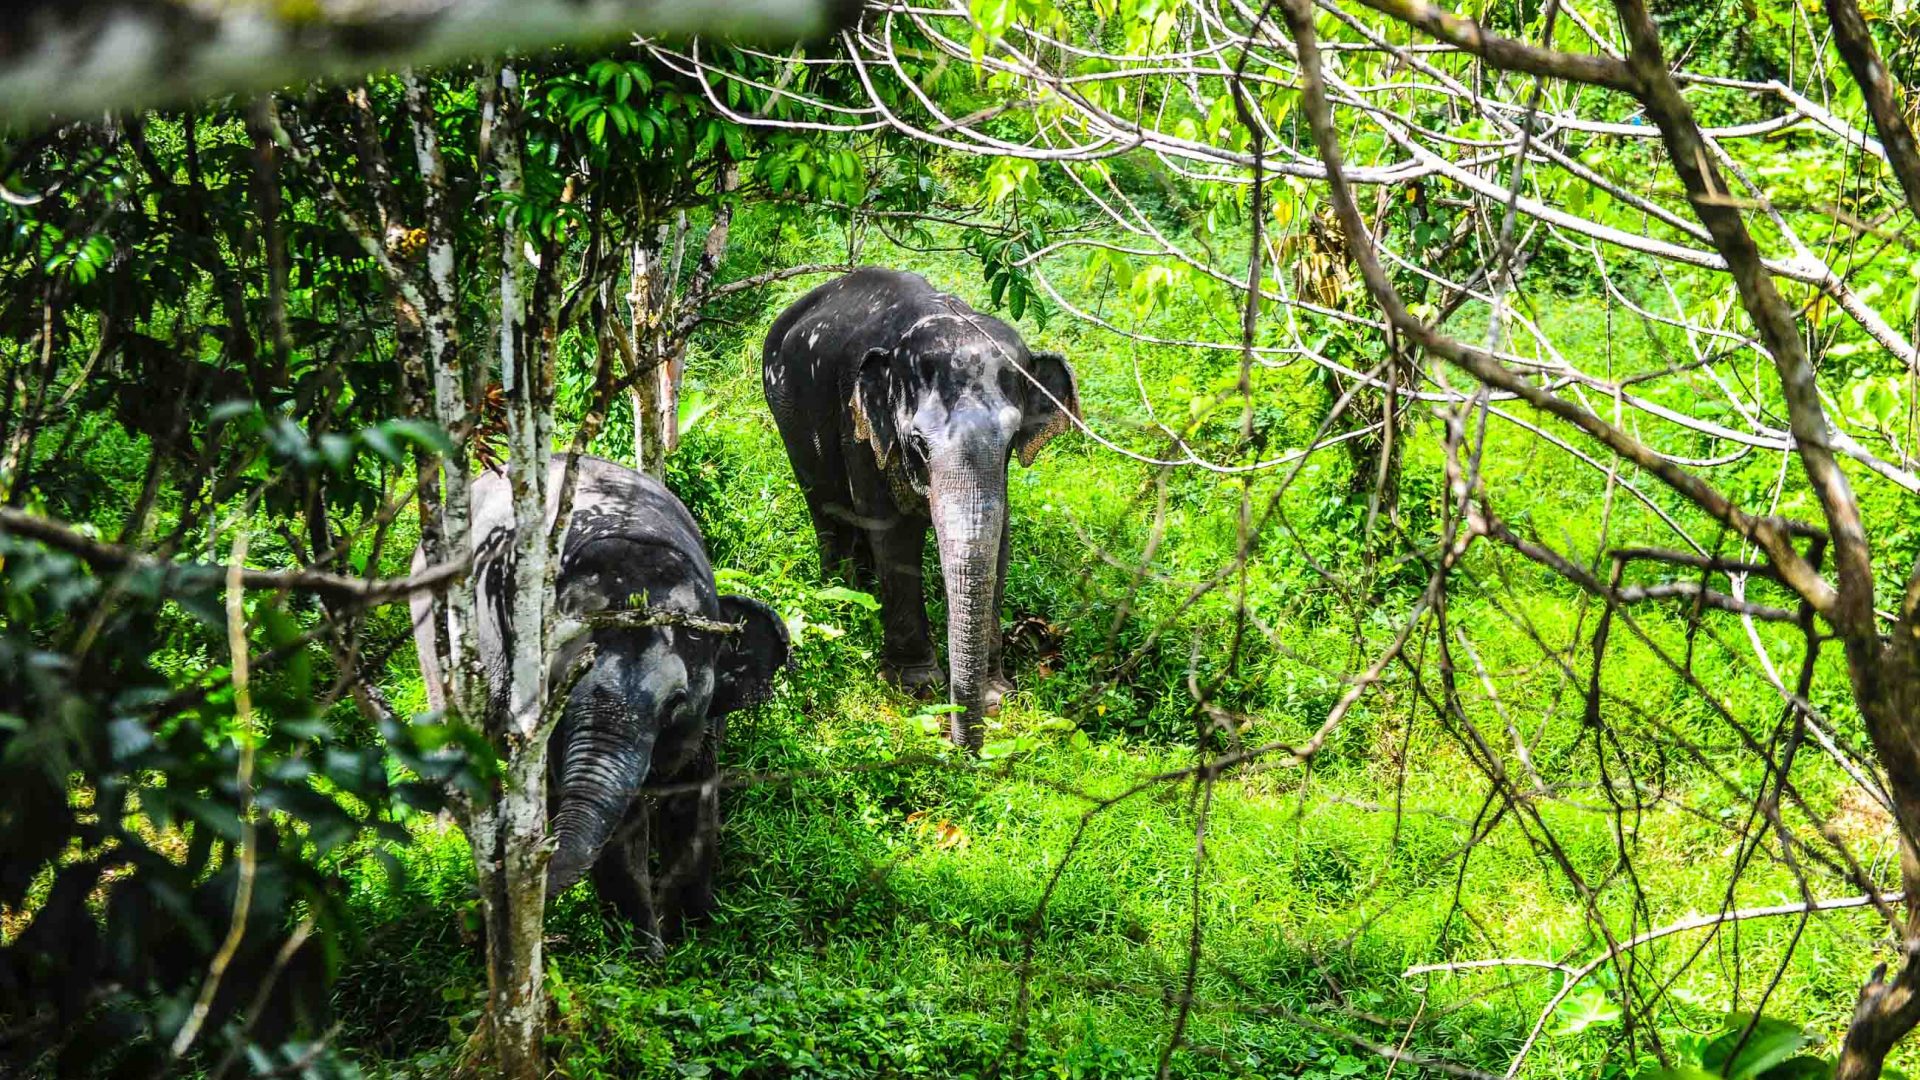 Elephants walking through the trees.